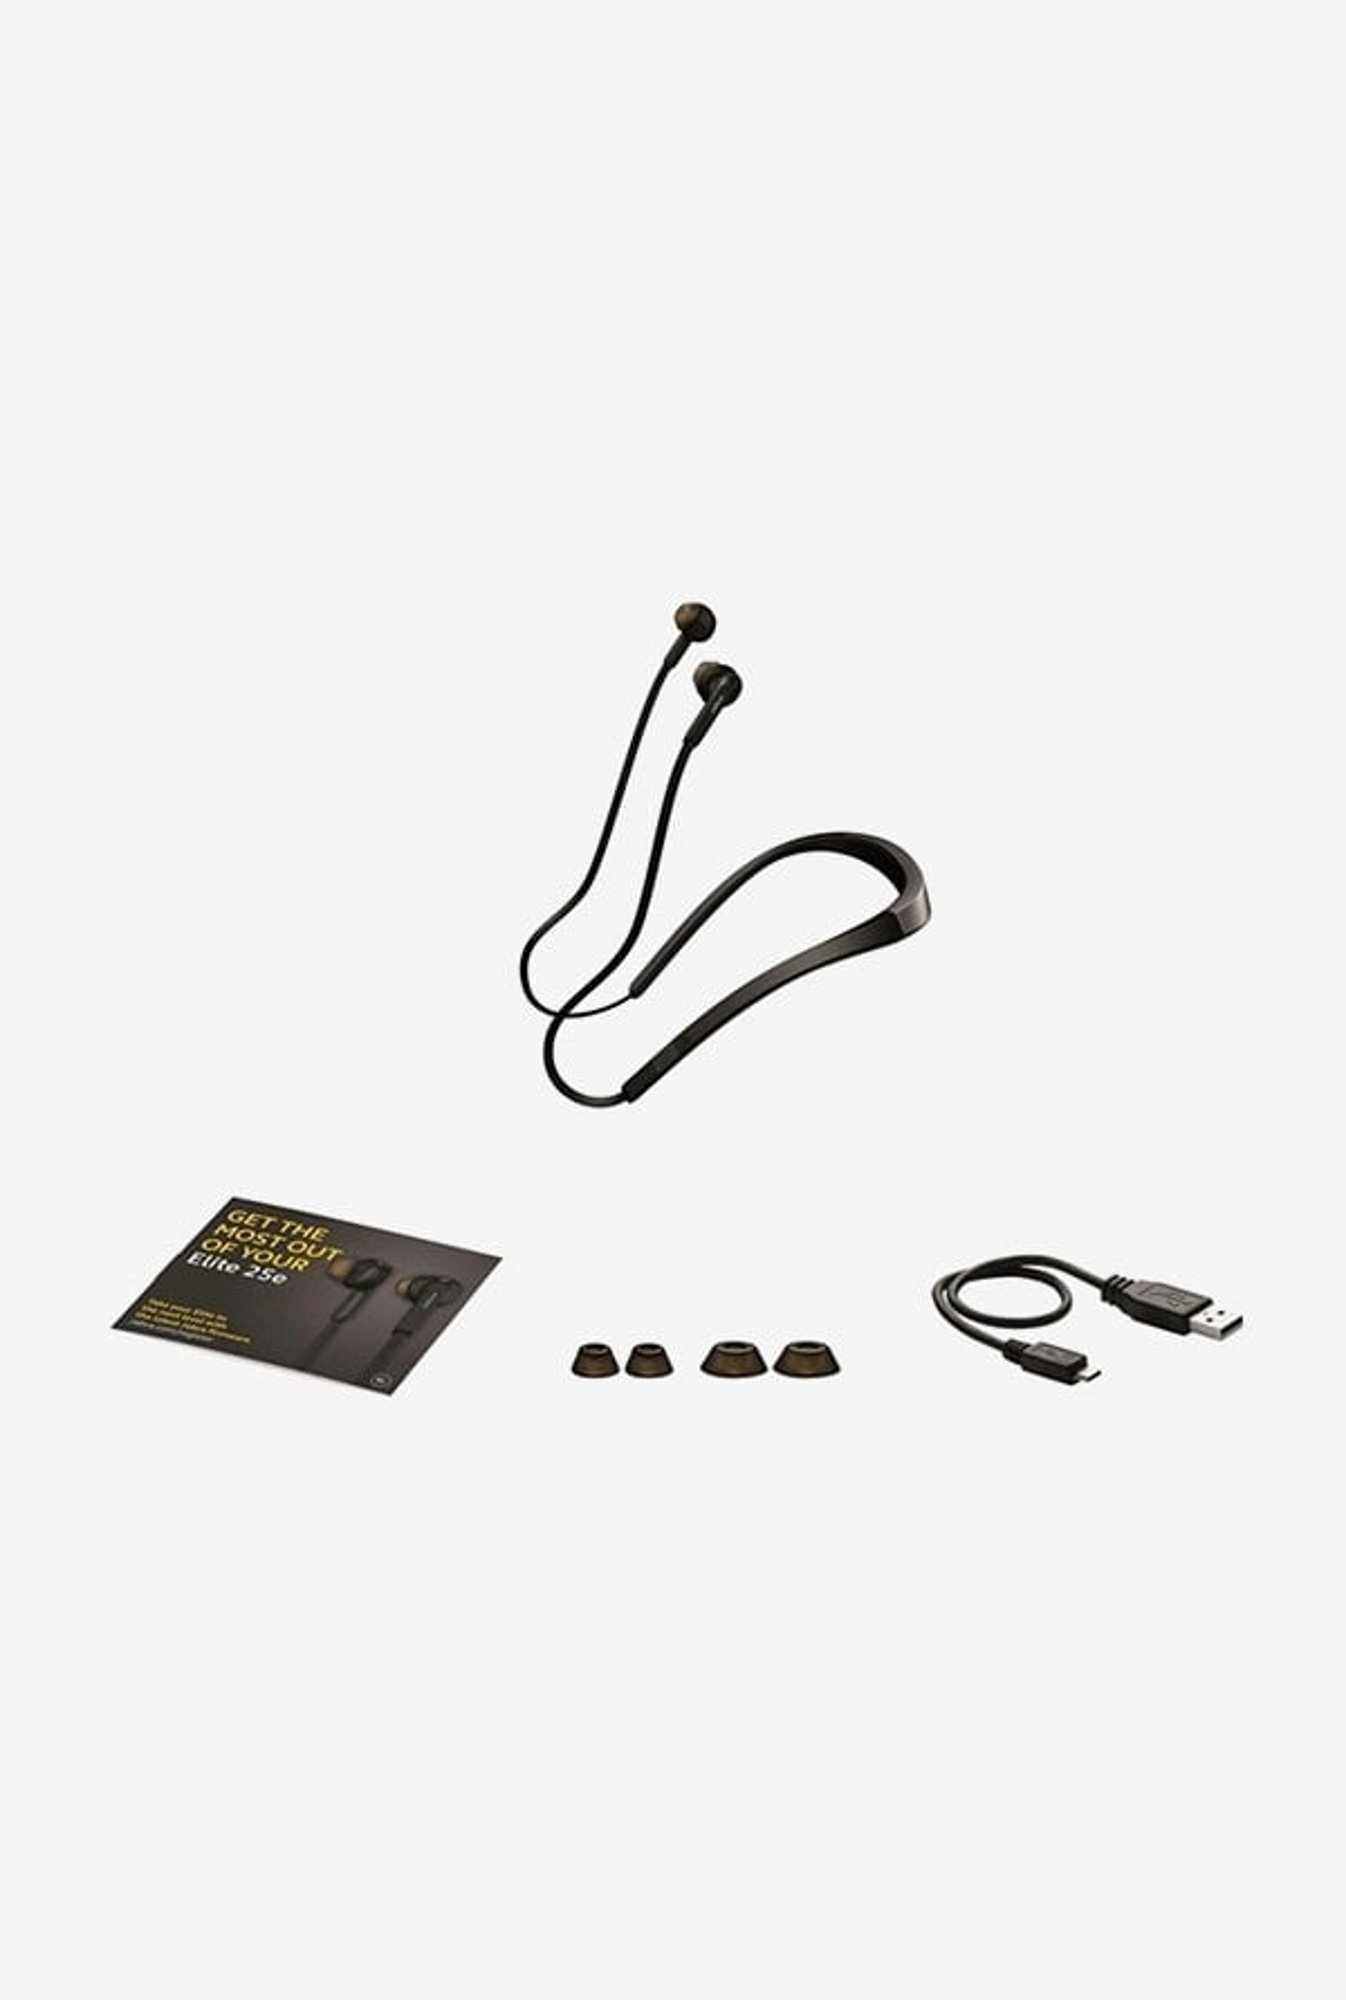 Silver Jabra Elite 25 E Wireless Bluetooth Neckband Headphone at